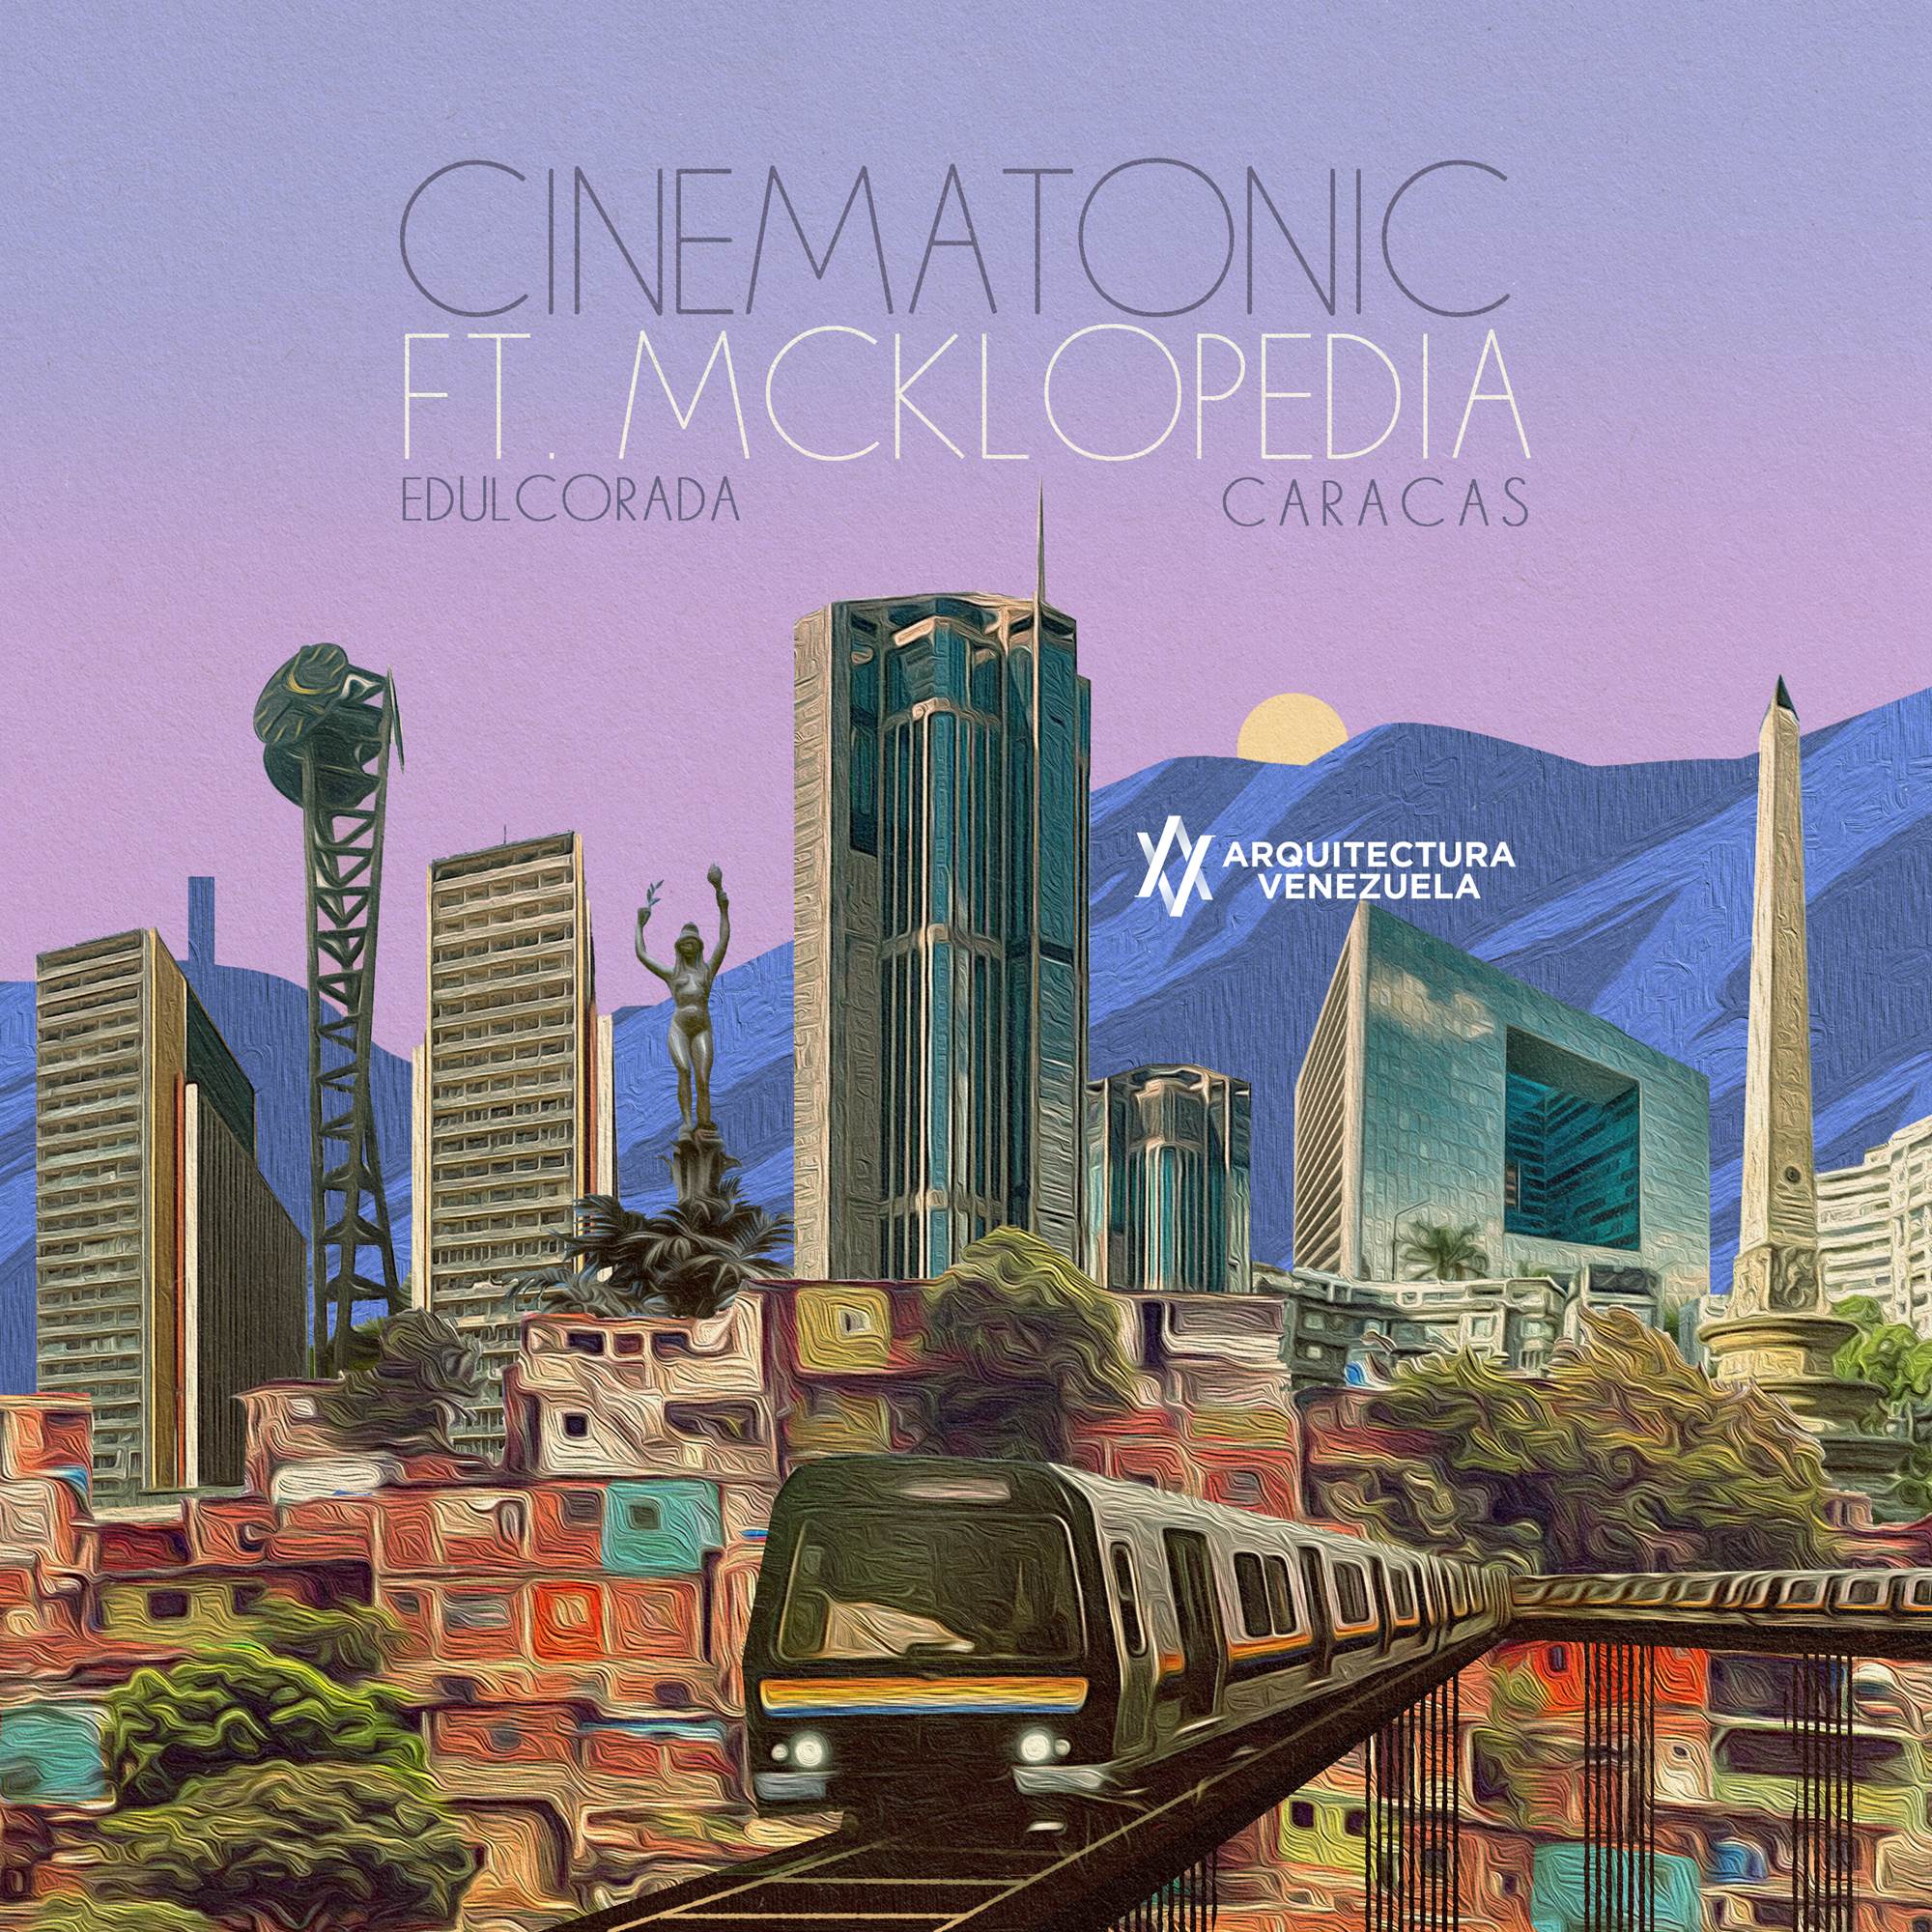 Cinematonic con McKlopedia rinden homenaje a Caracas